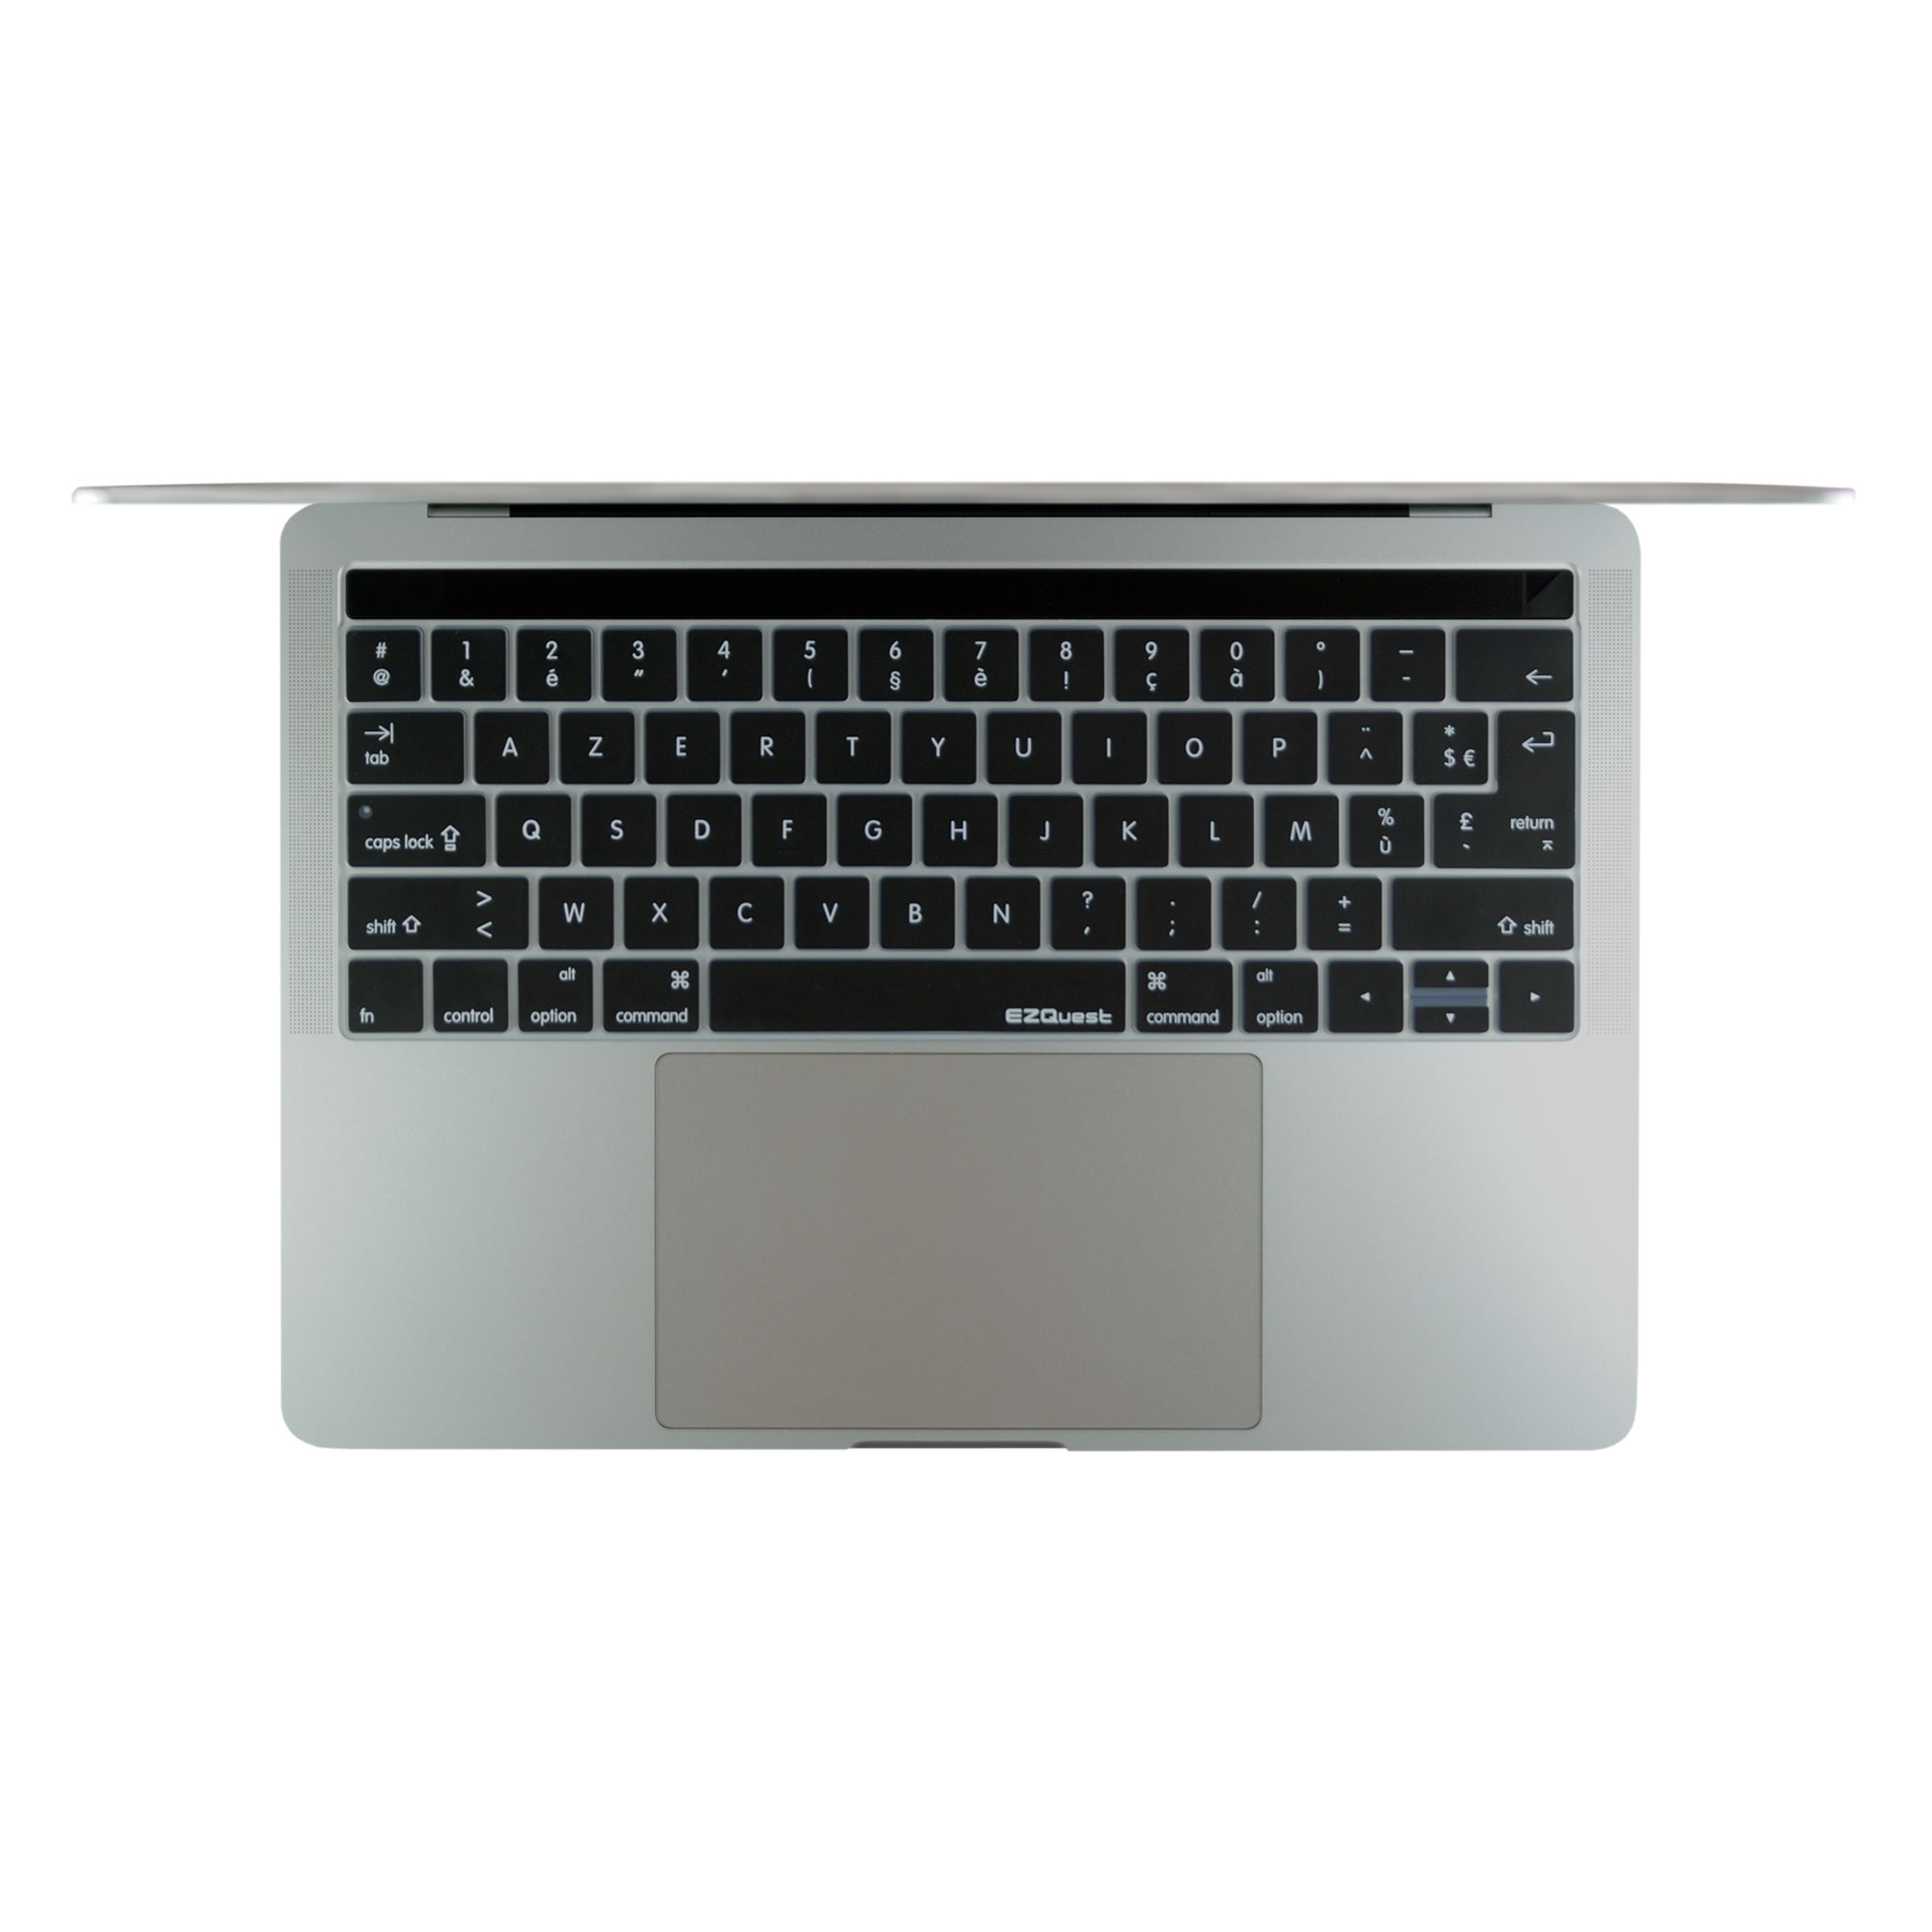 Usb keyboard for mac